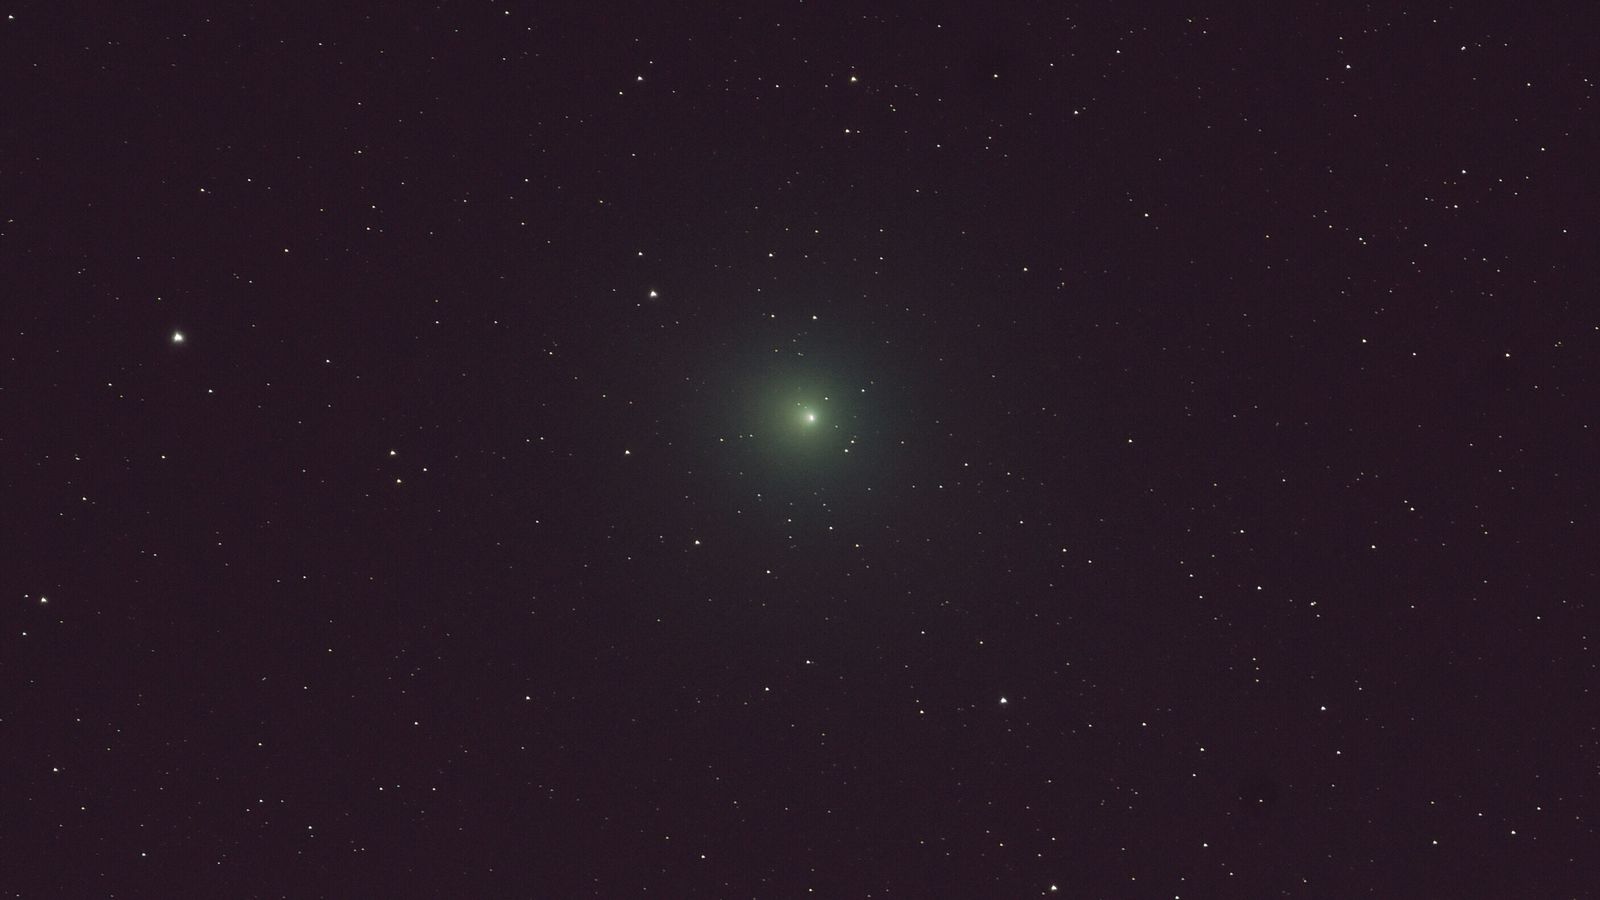 Comet 46P/Wirtanen on December 15th, 2018